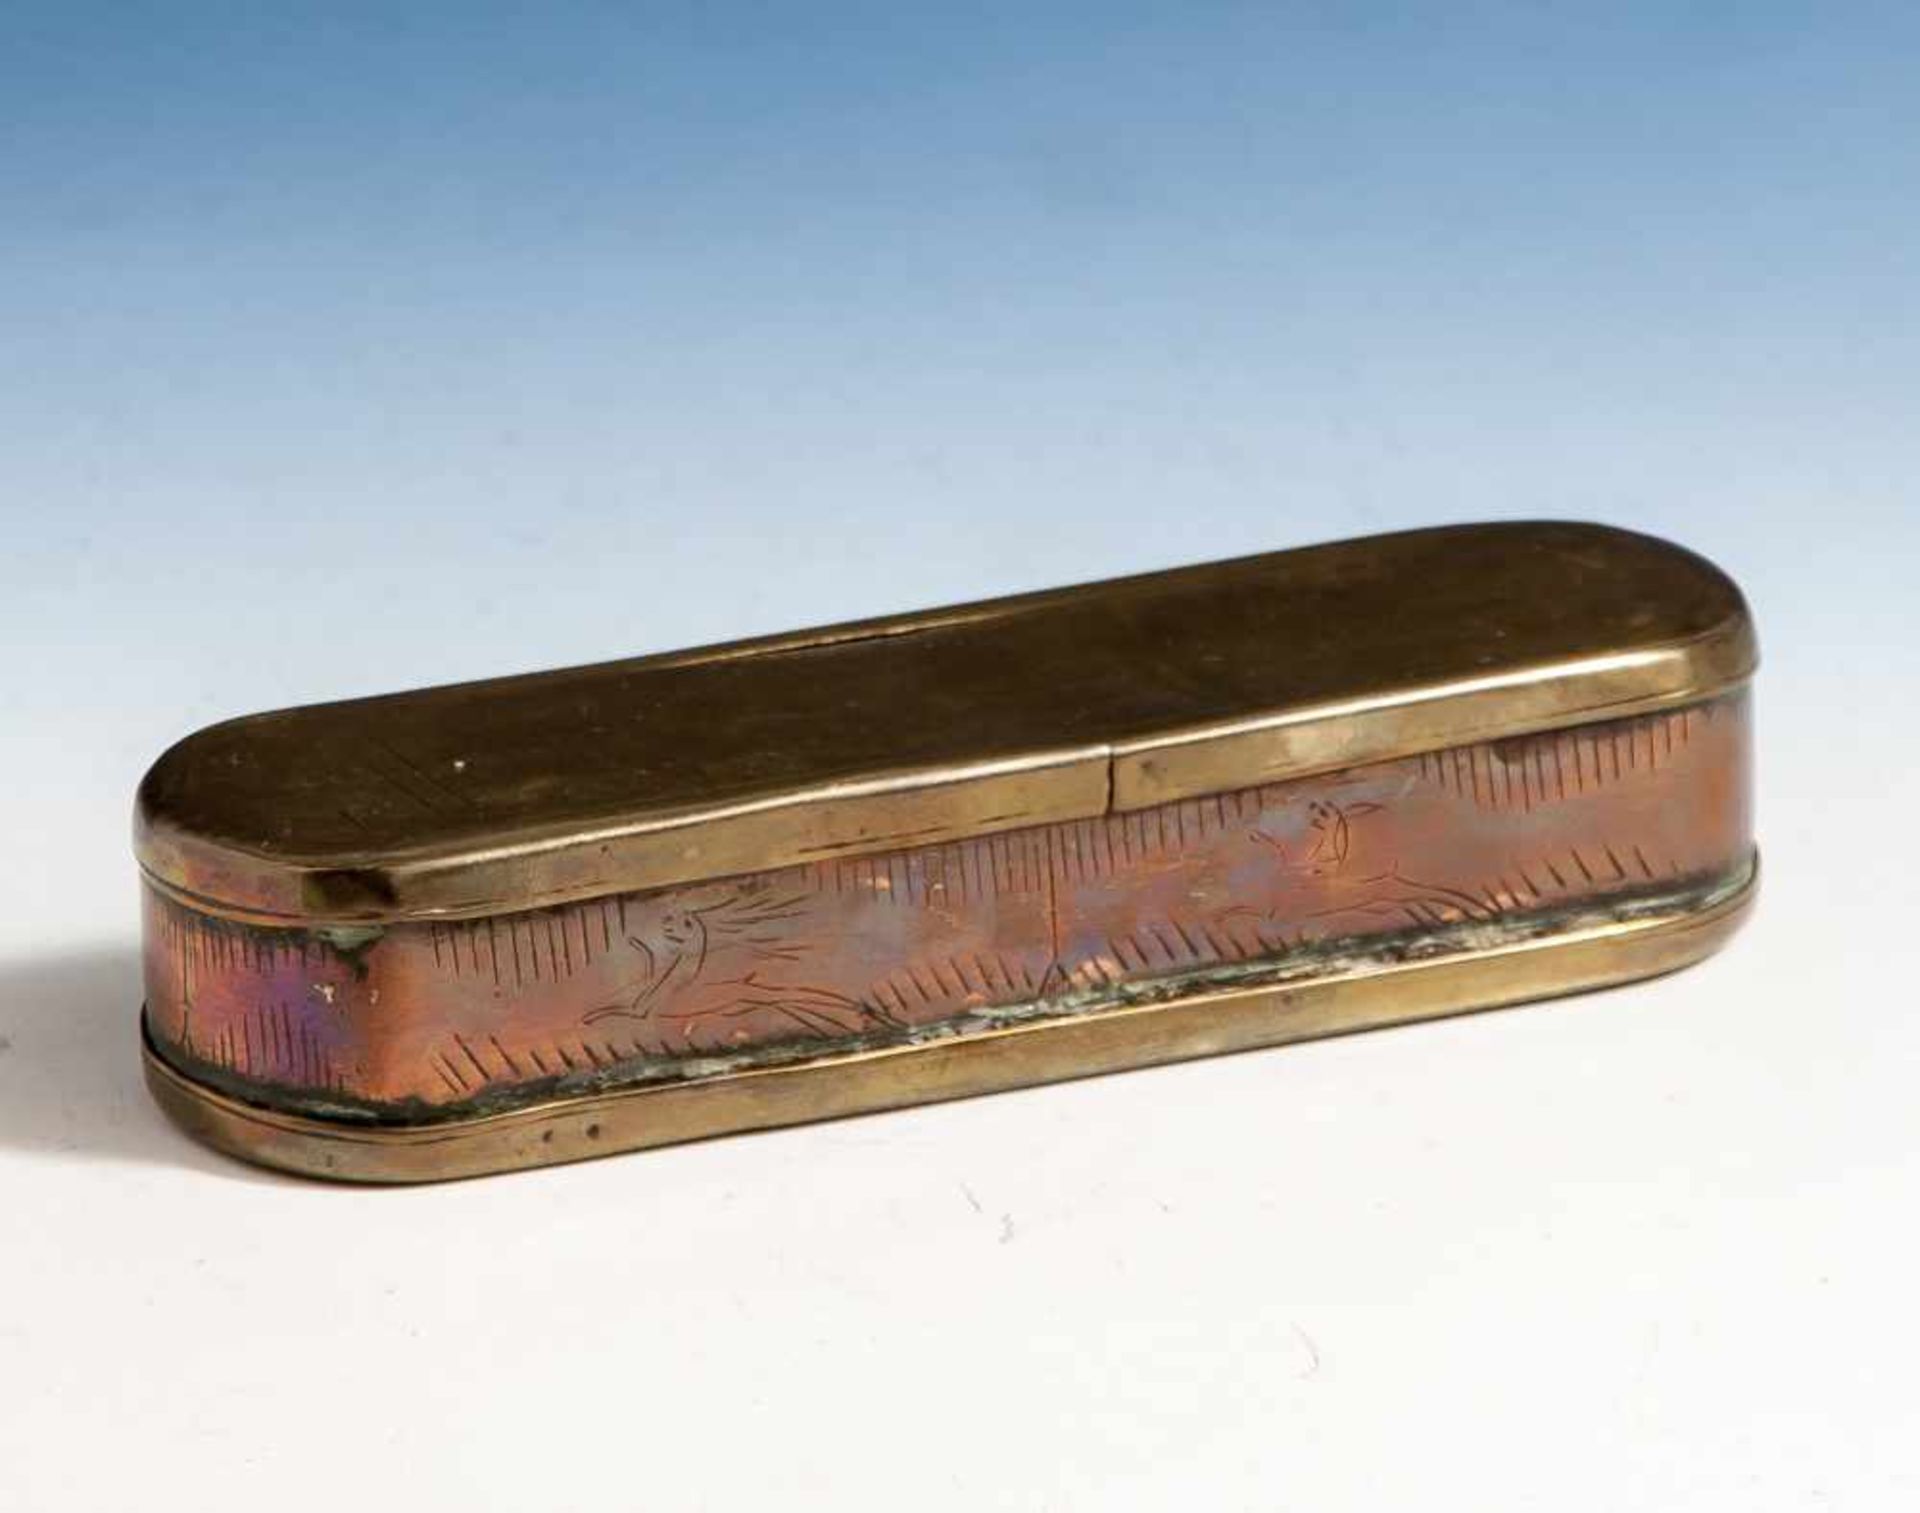 Tabakdose, wohl Holland, 18. Jahrhundert, Messing/Kupfer, Rechtecksform mit abgerundeten Kanten,